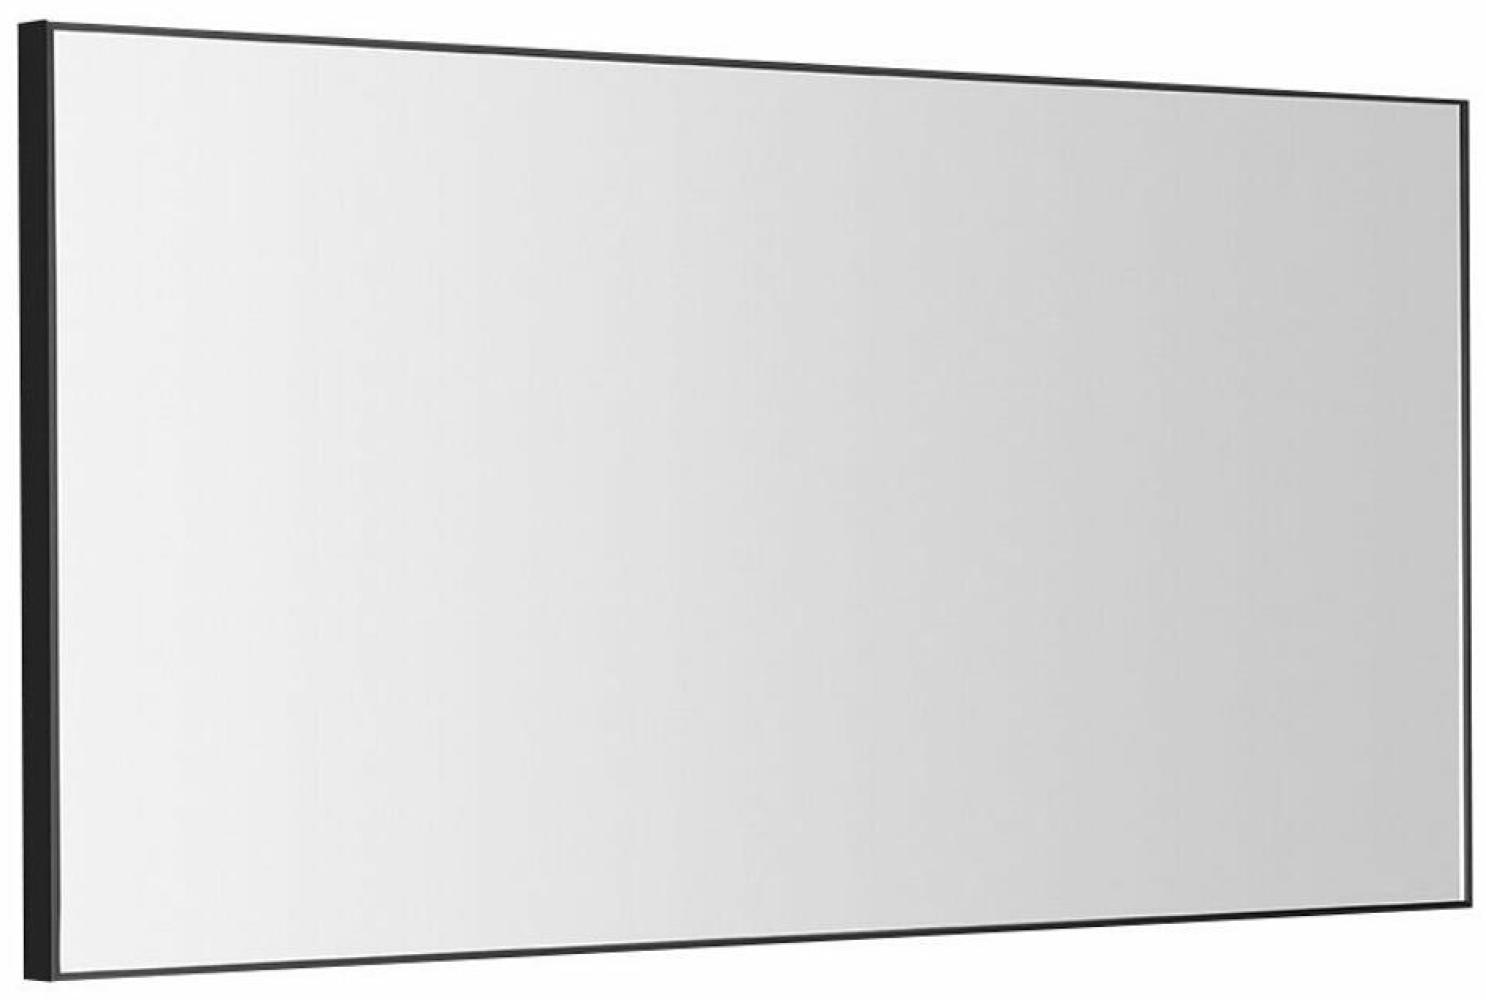 AROWANA Spiegel mit Rahmen, 1000x500mm, schwarz Bild 1